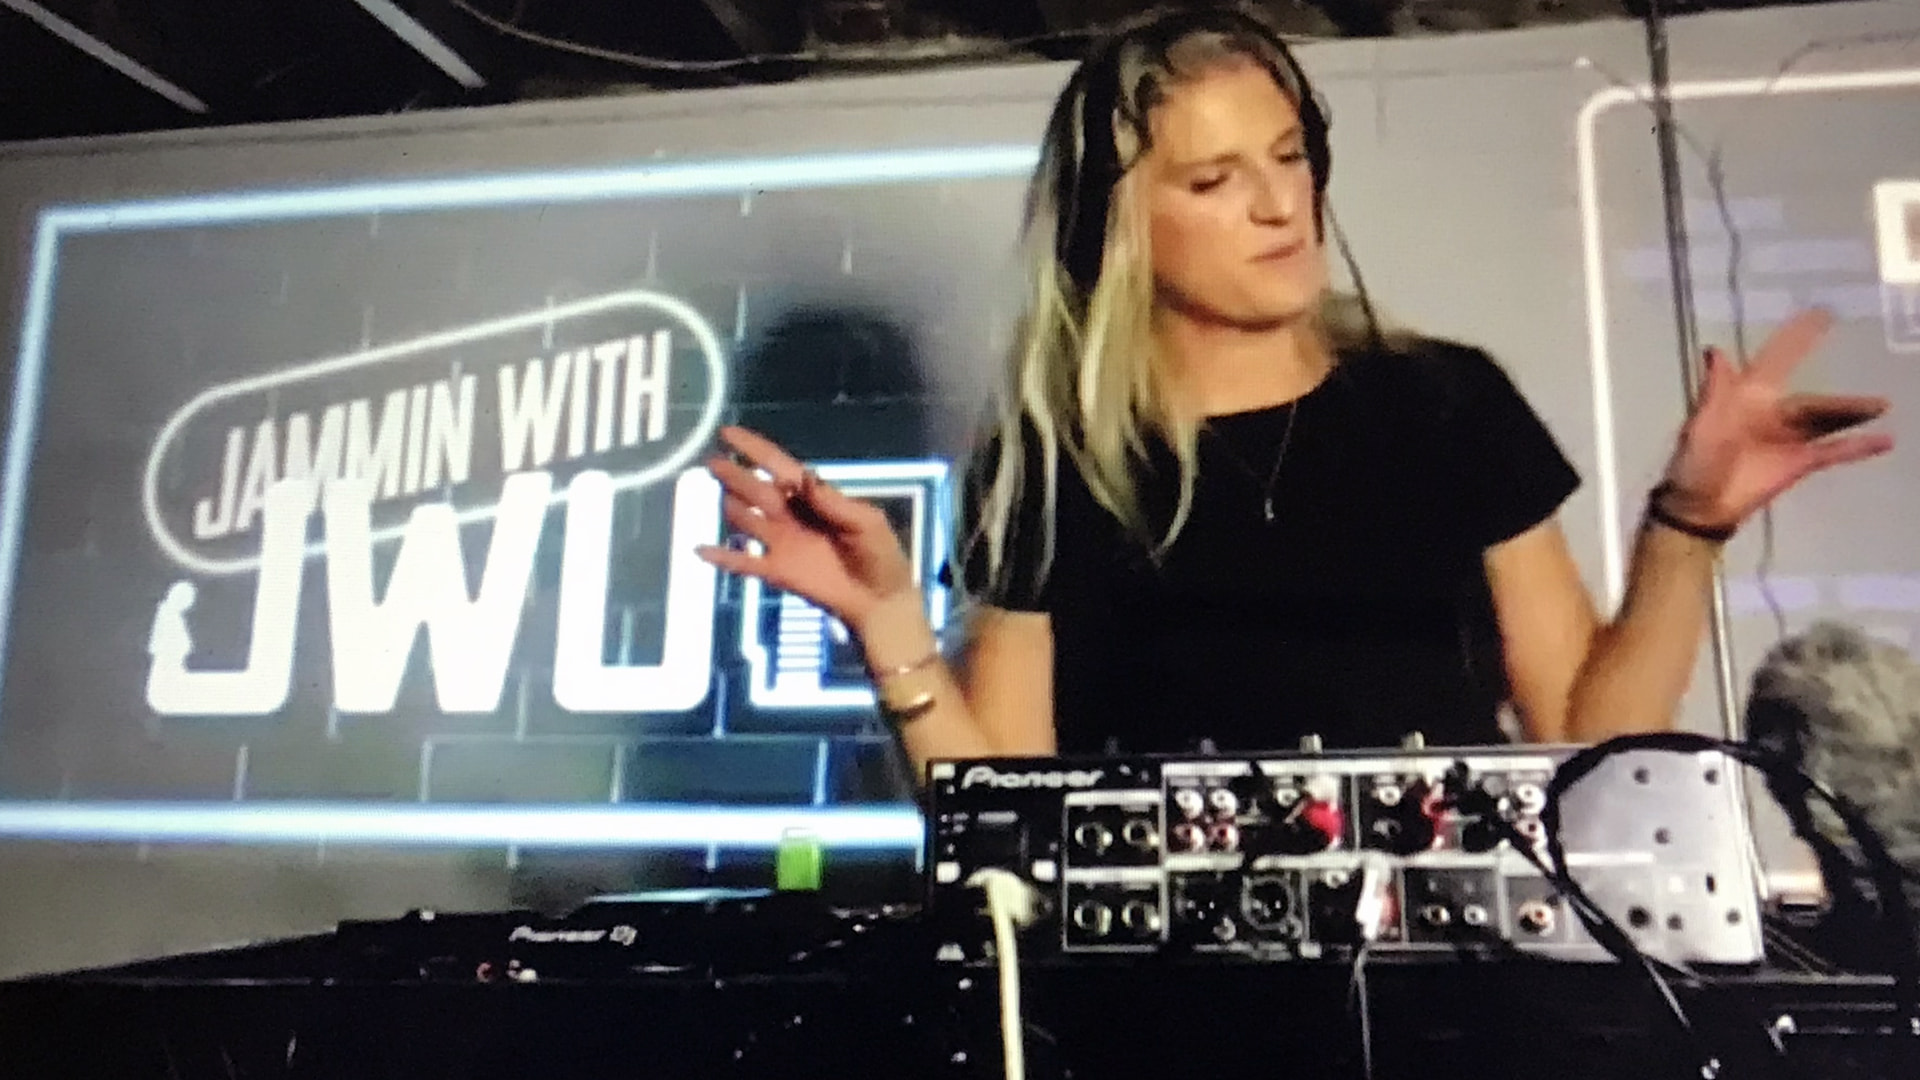 Colorado-based DJ h0usewife during her JWU set on Zoom.